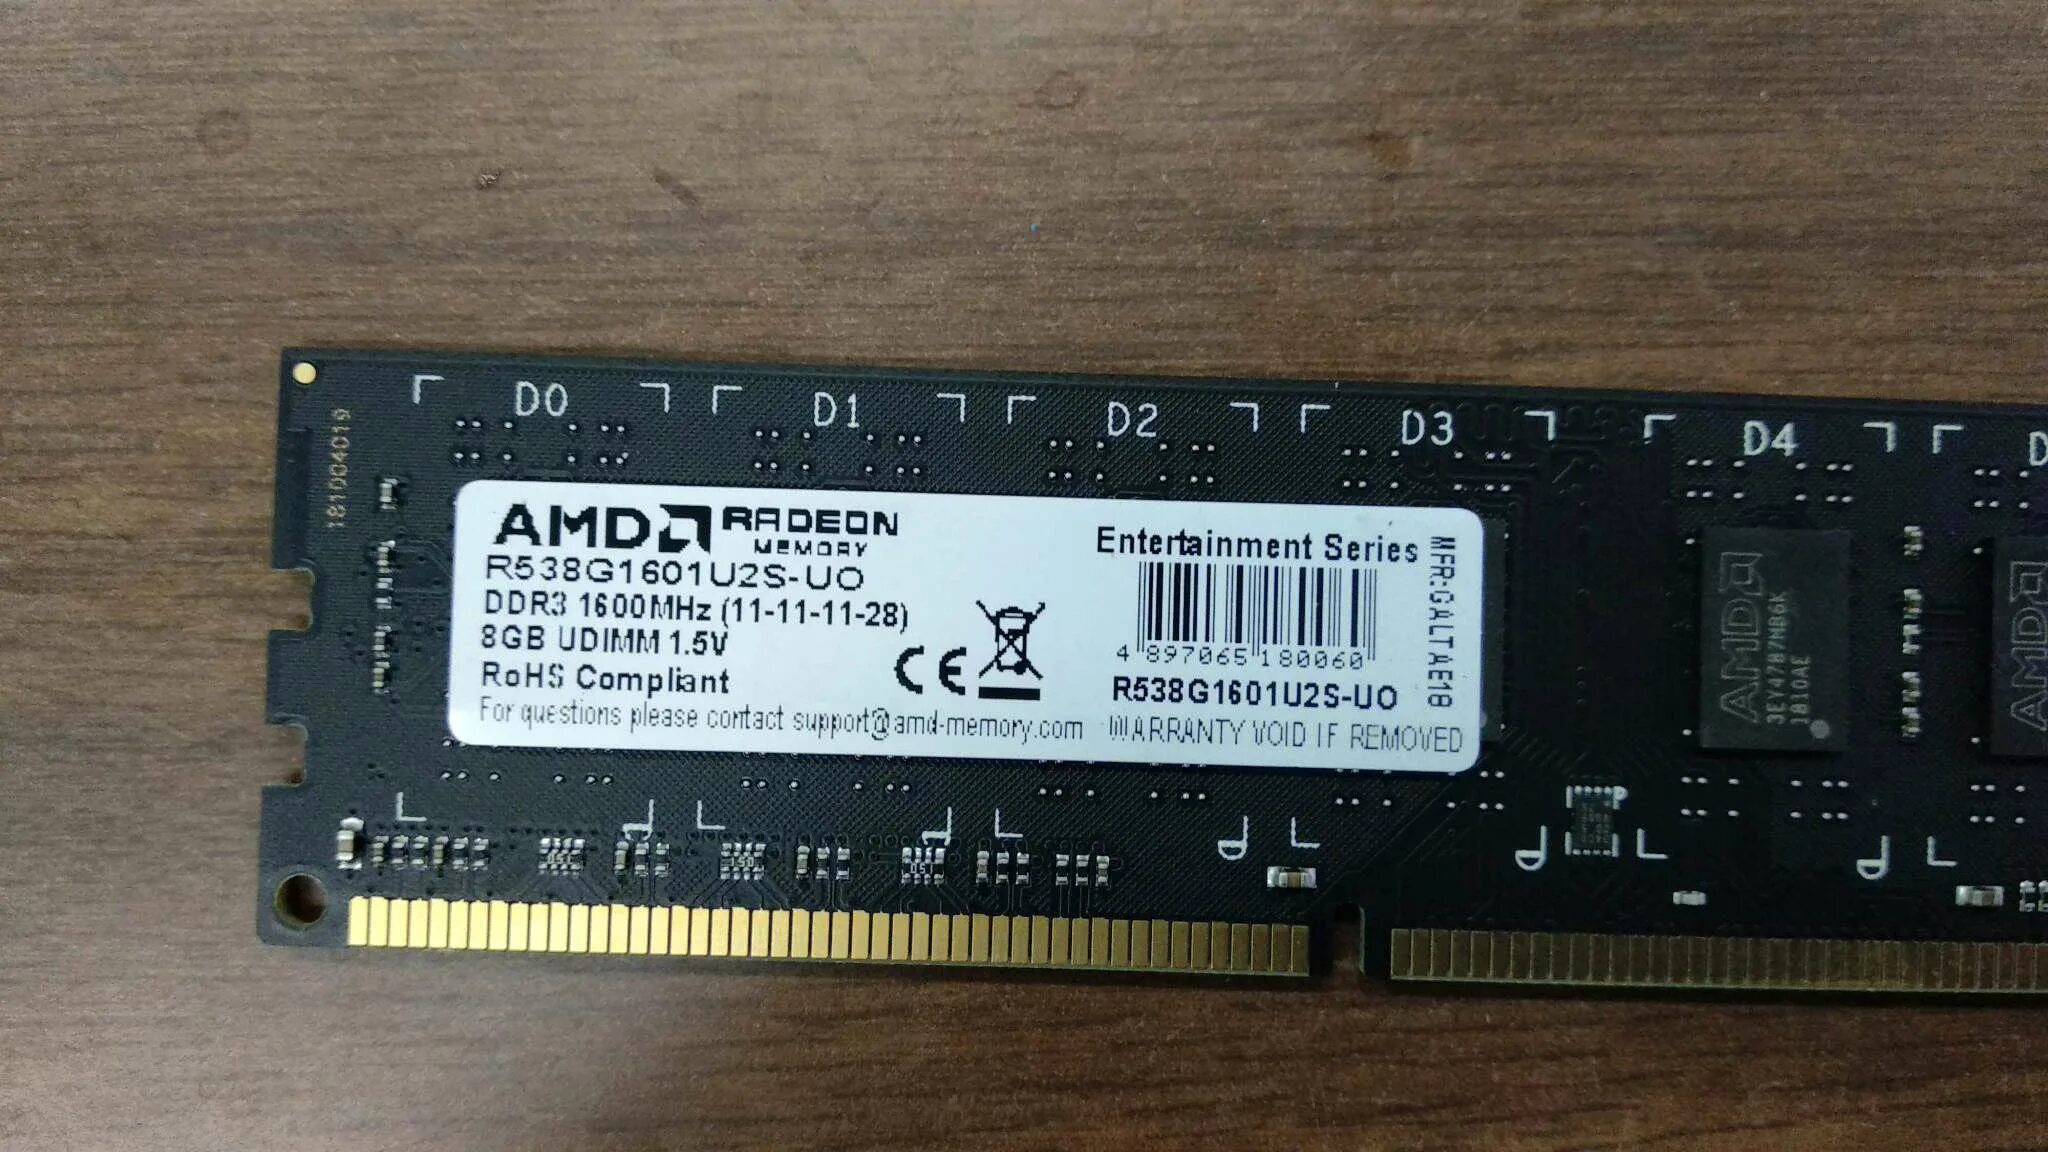 Amd 2 series. Оперативная память AMD so-DIMM ddr3l 8gb 1600mhz PC-12800 (r538g1601s2sl-u) Ret. Оперативная память AMD ddr3 8gb 1600mhz. Оперативная память ddr3 AMD 8gb. Оперативная память АМД 8 ГБ ддр3.